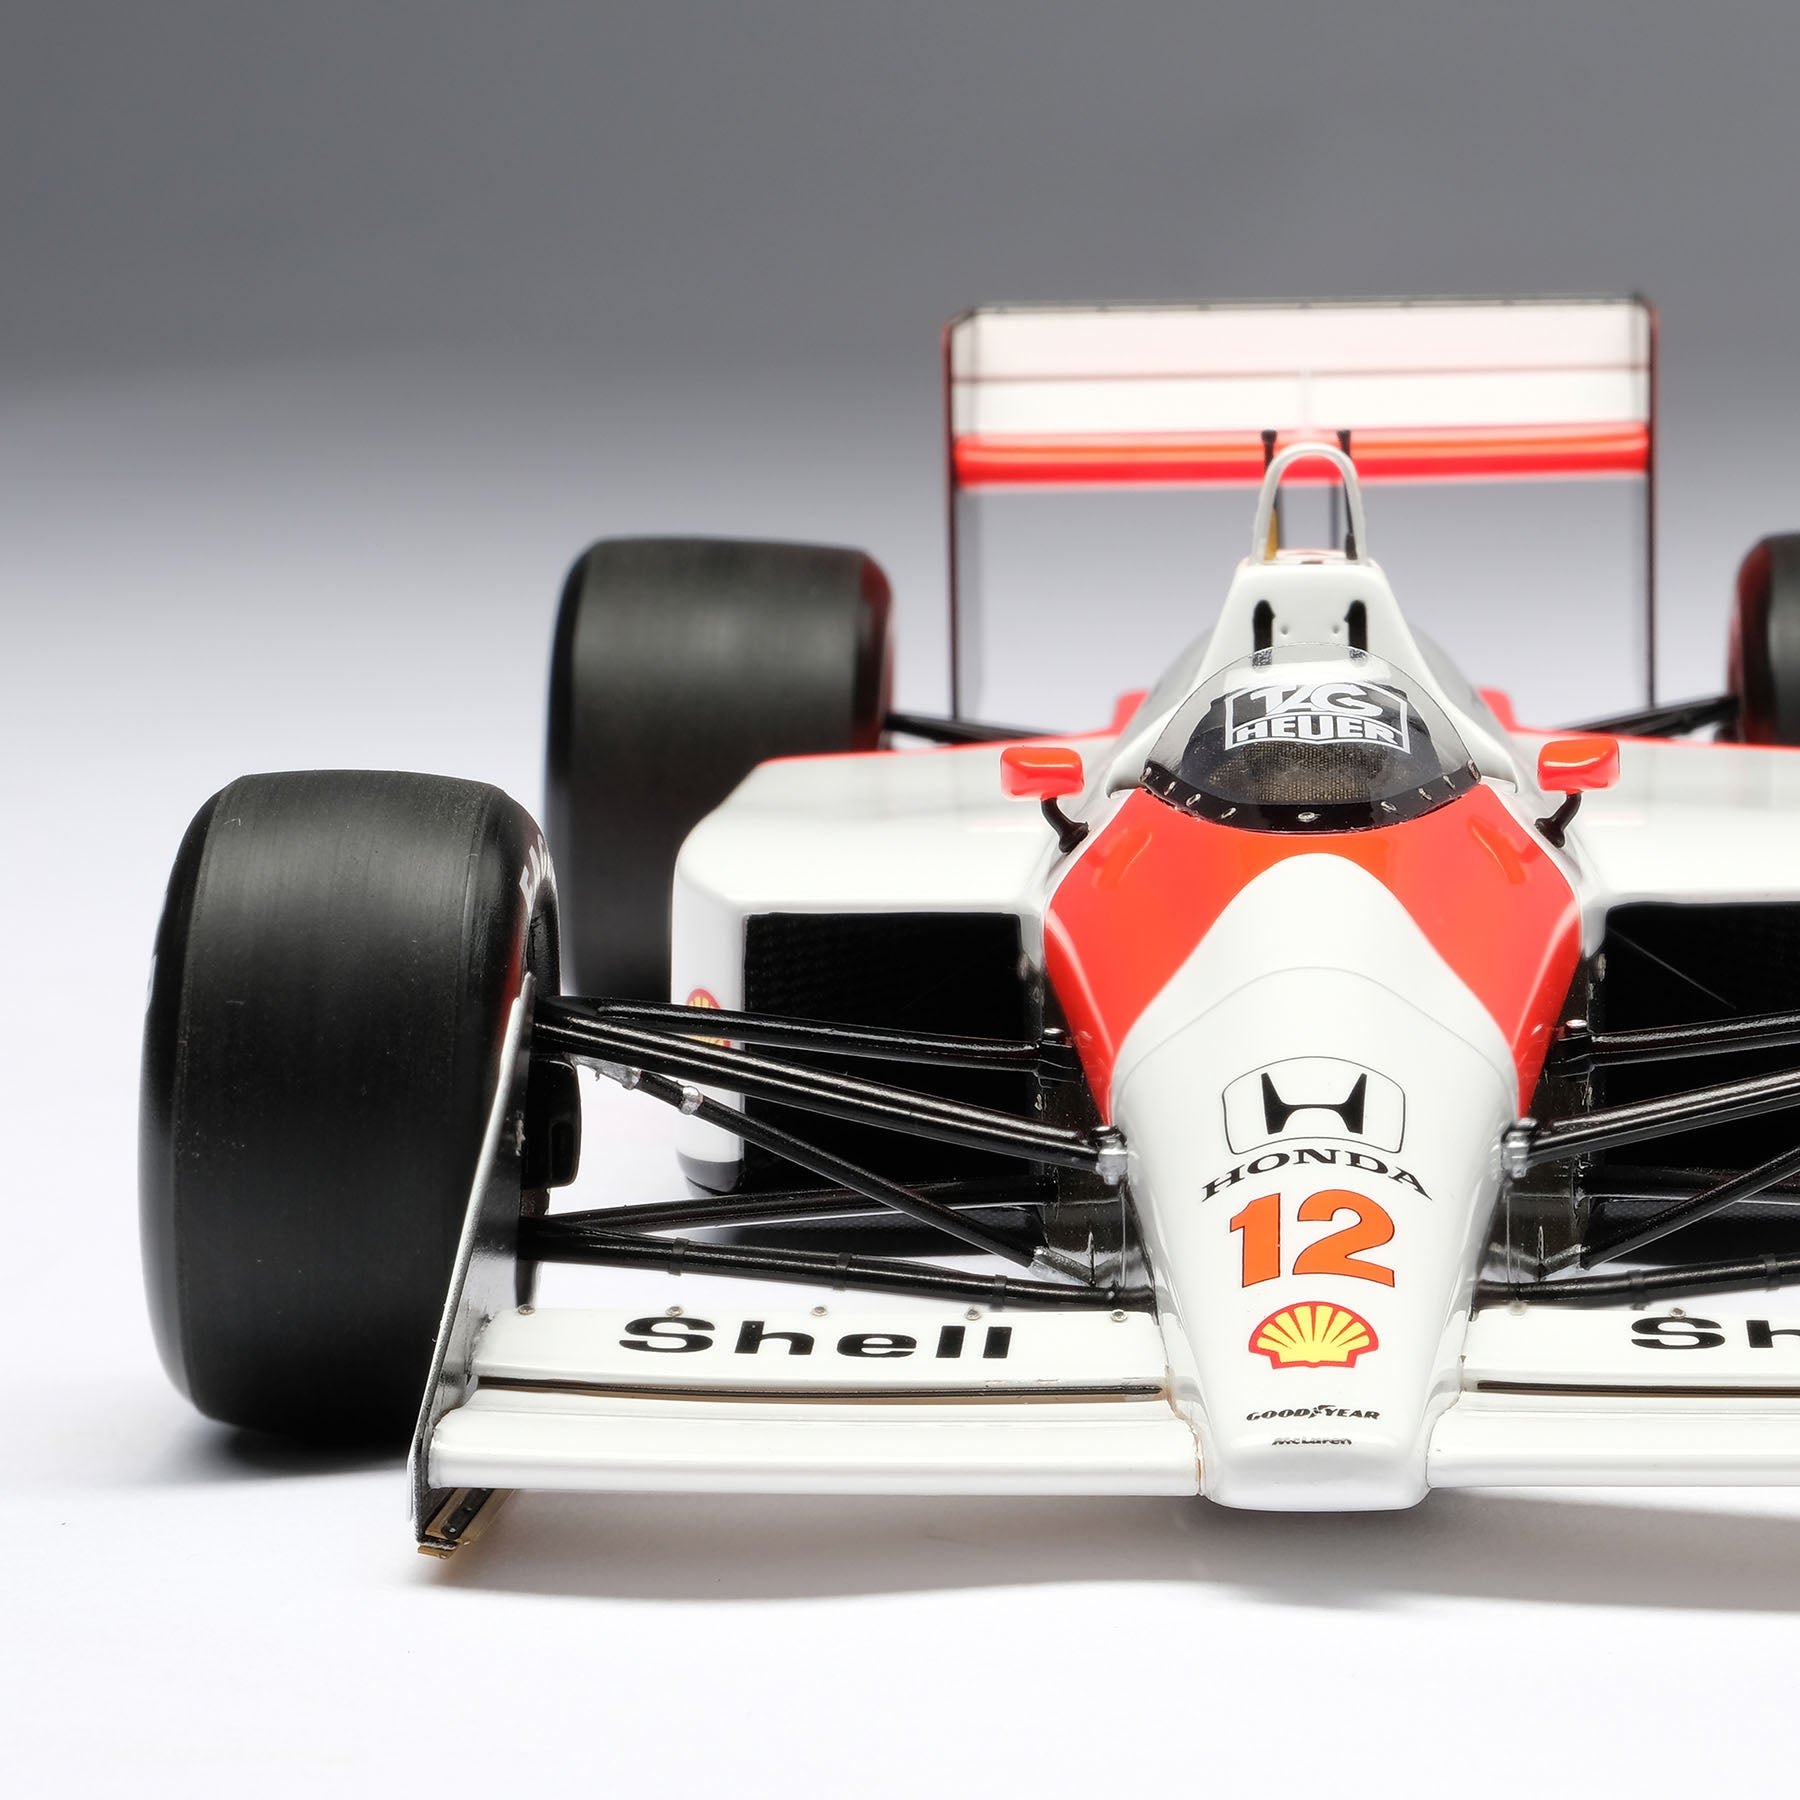 McLaren MP4/4 at 1:18 scale